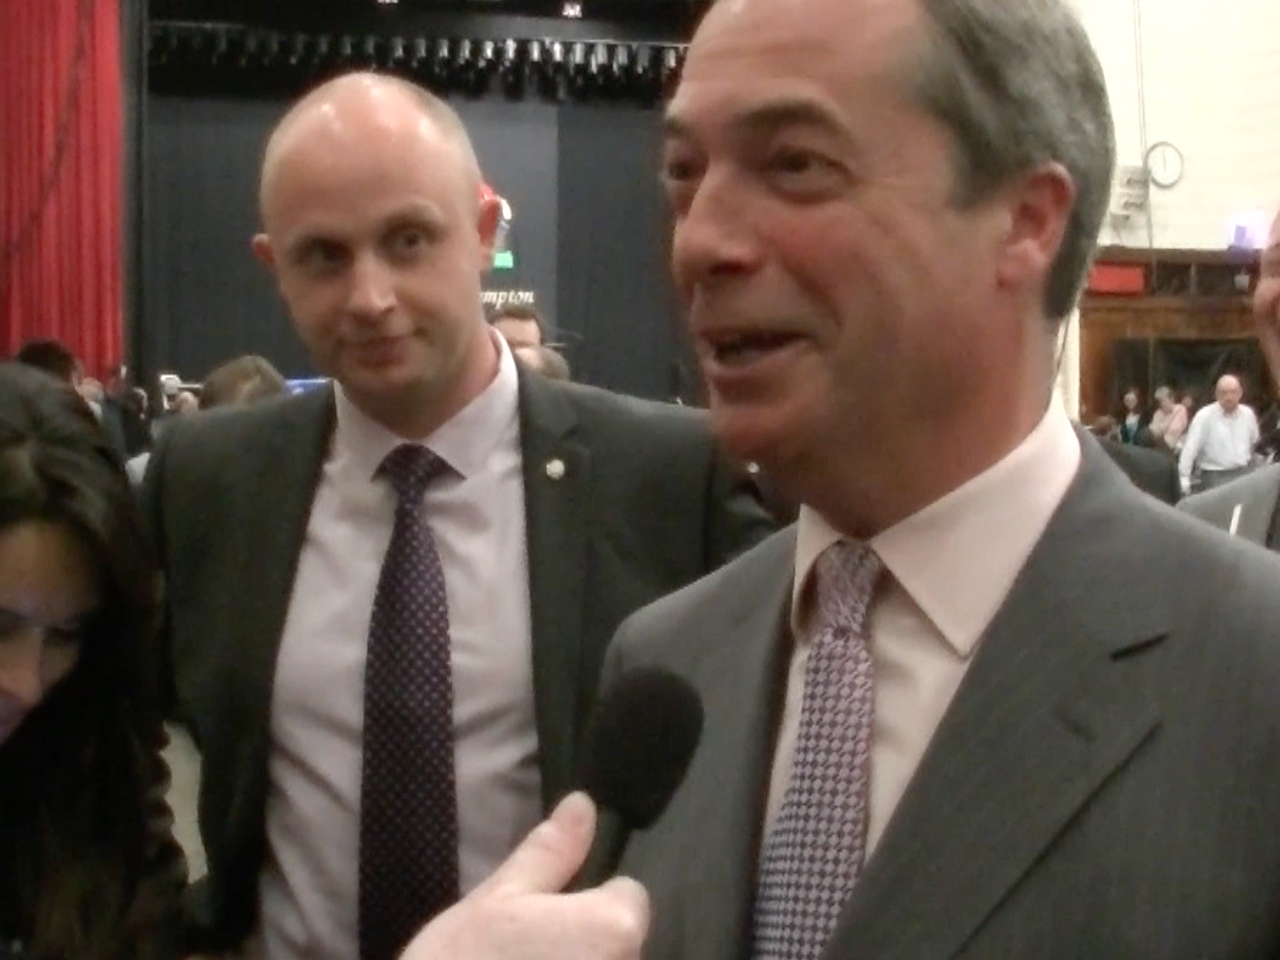 EXCLUSIVE: Interview with UKIP's Farage -Â 'Goodbyeeeee!' to Nick Clegg